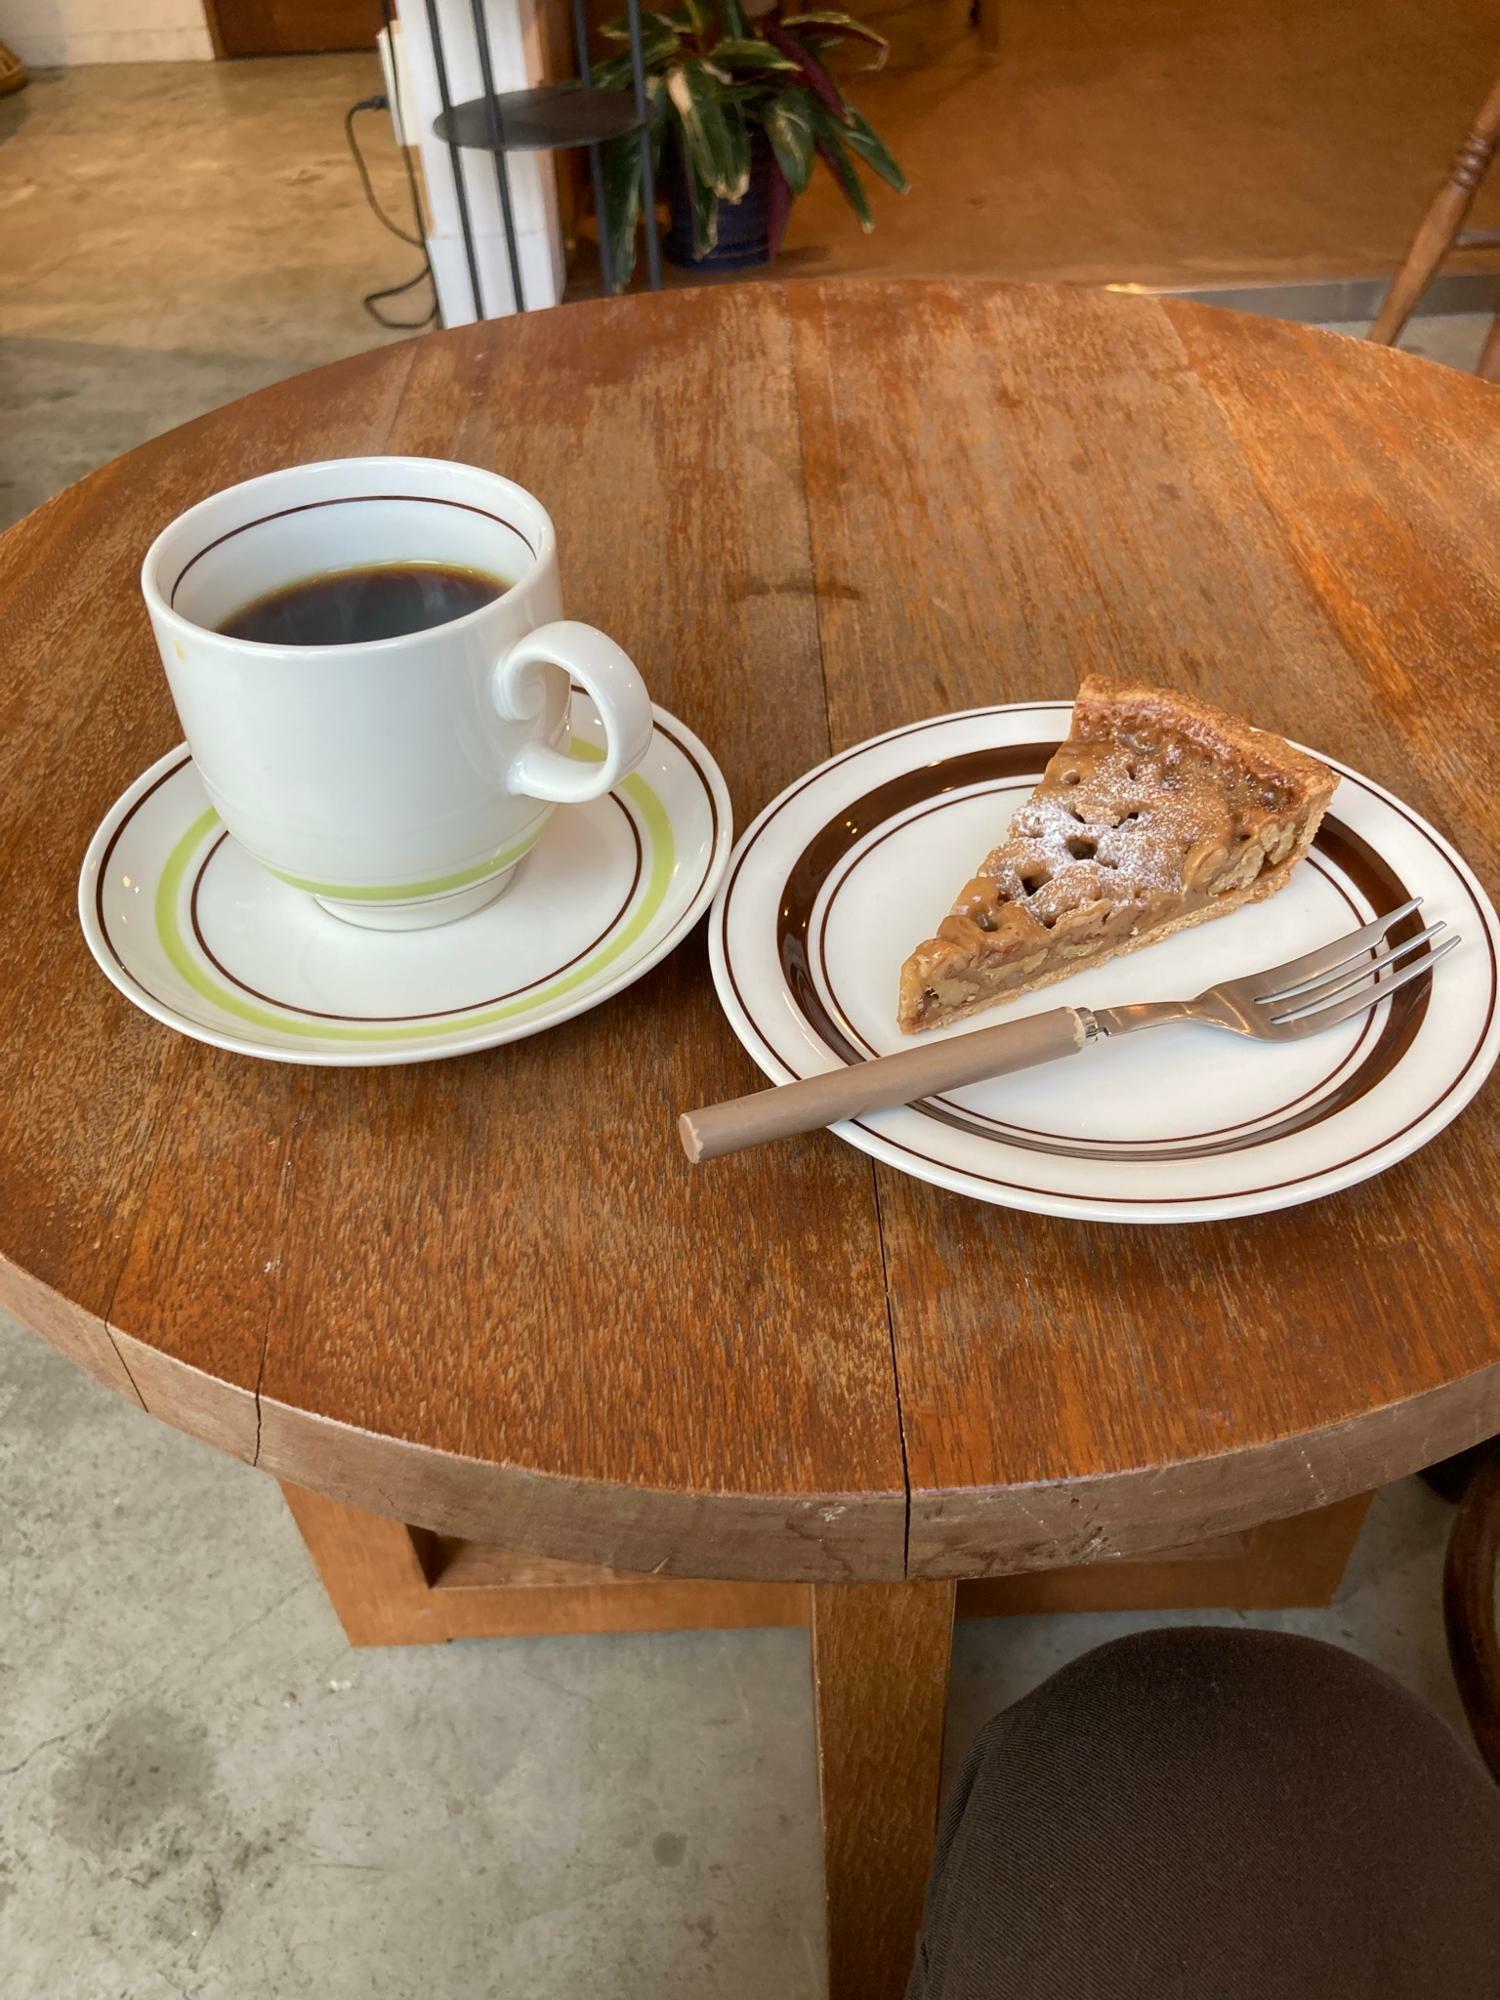 Small things coffeeでは石狩のSoup to Bread のタルトなどを用意